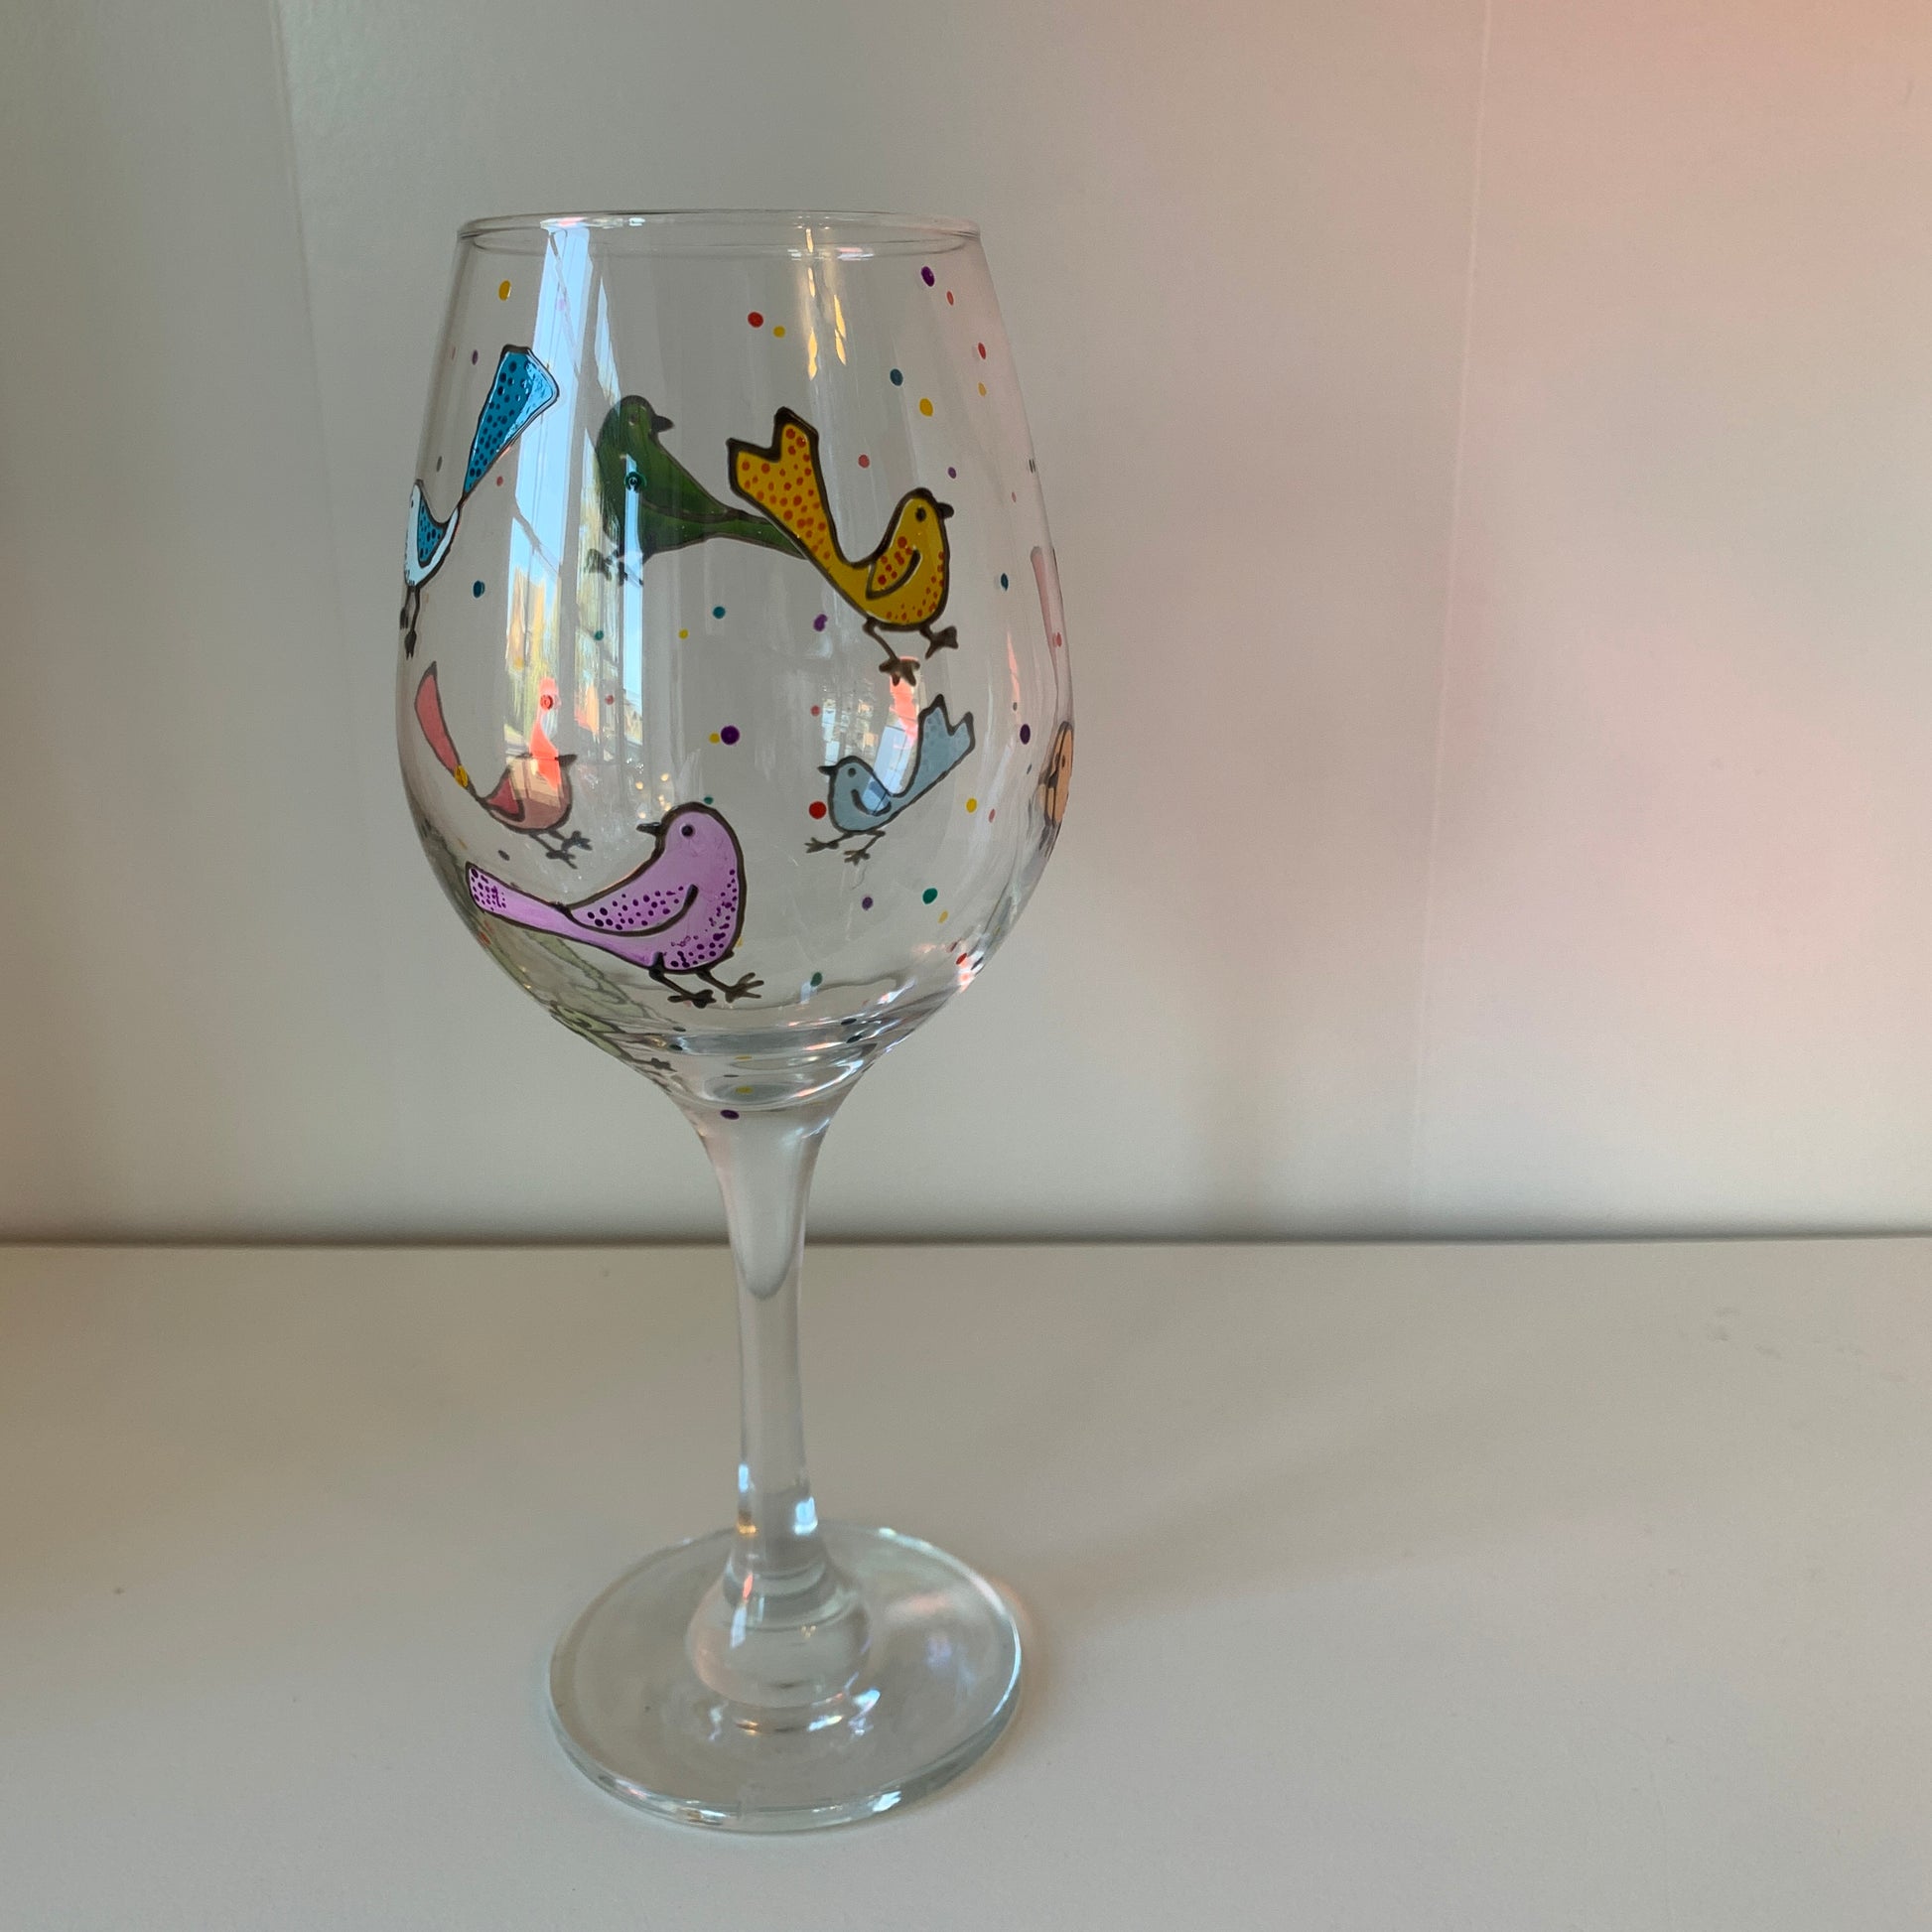 Rainbow Crabs Hand Painted Wine Glasses, Set of 8